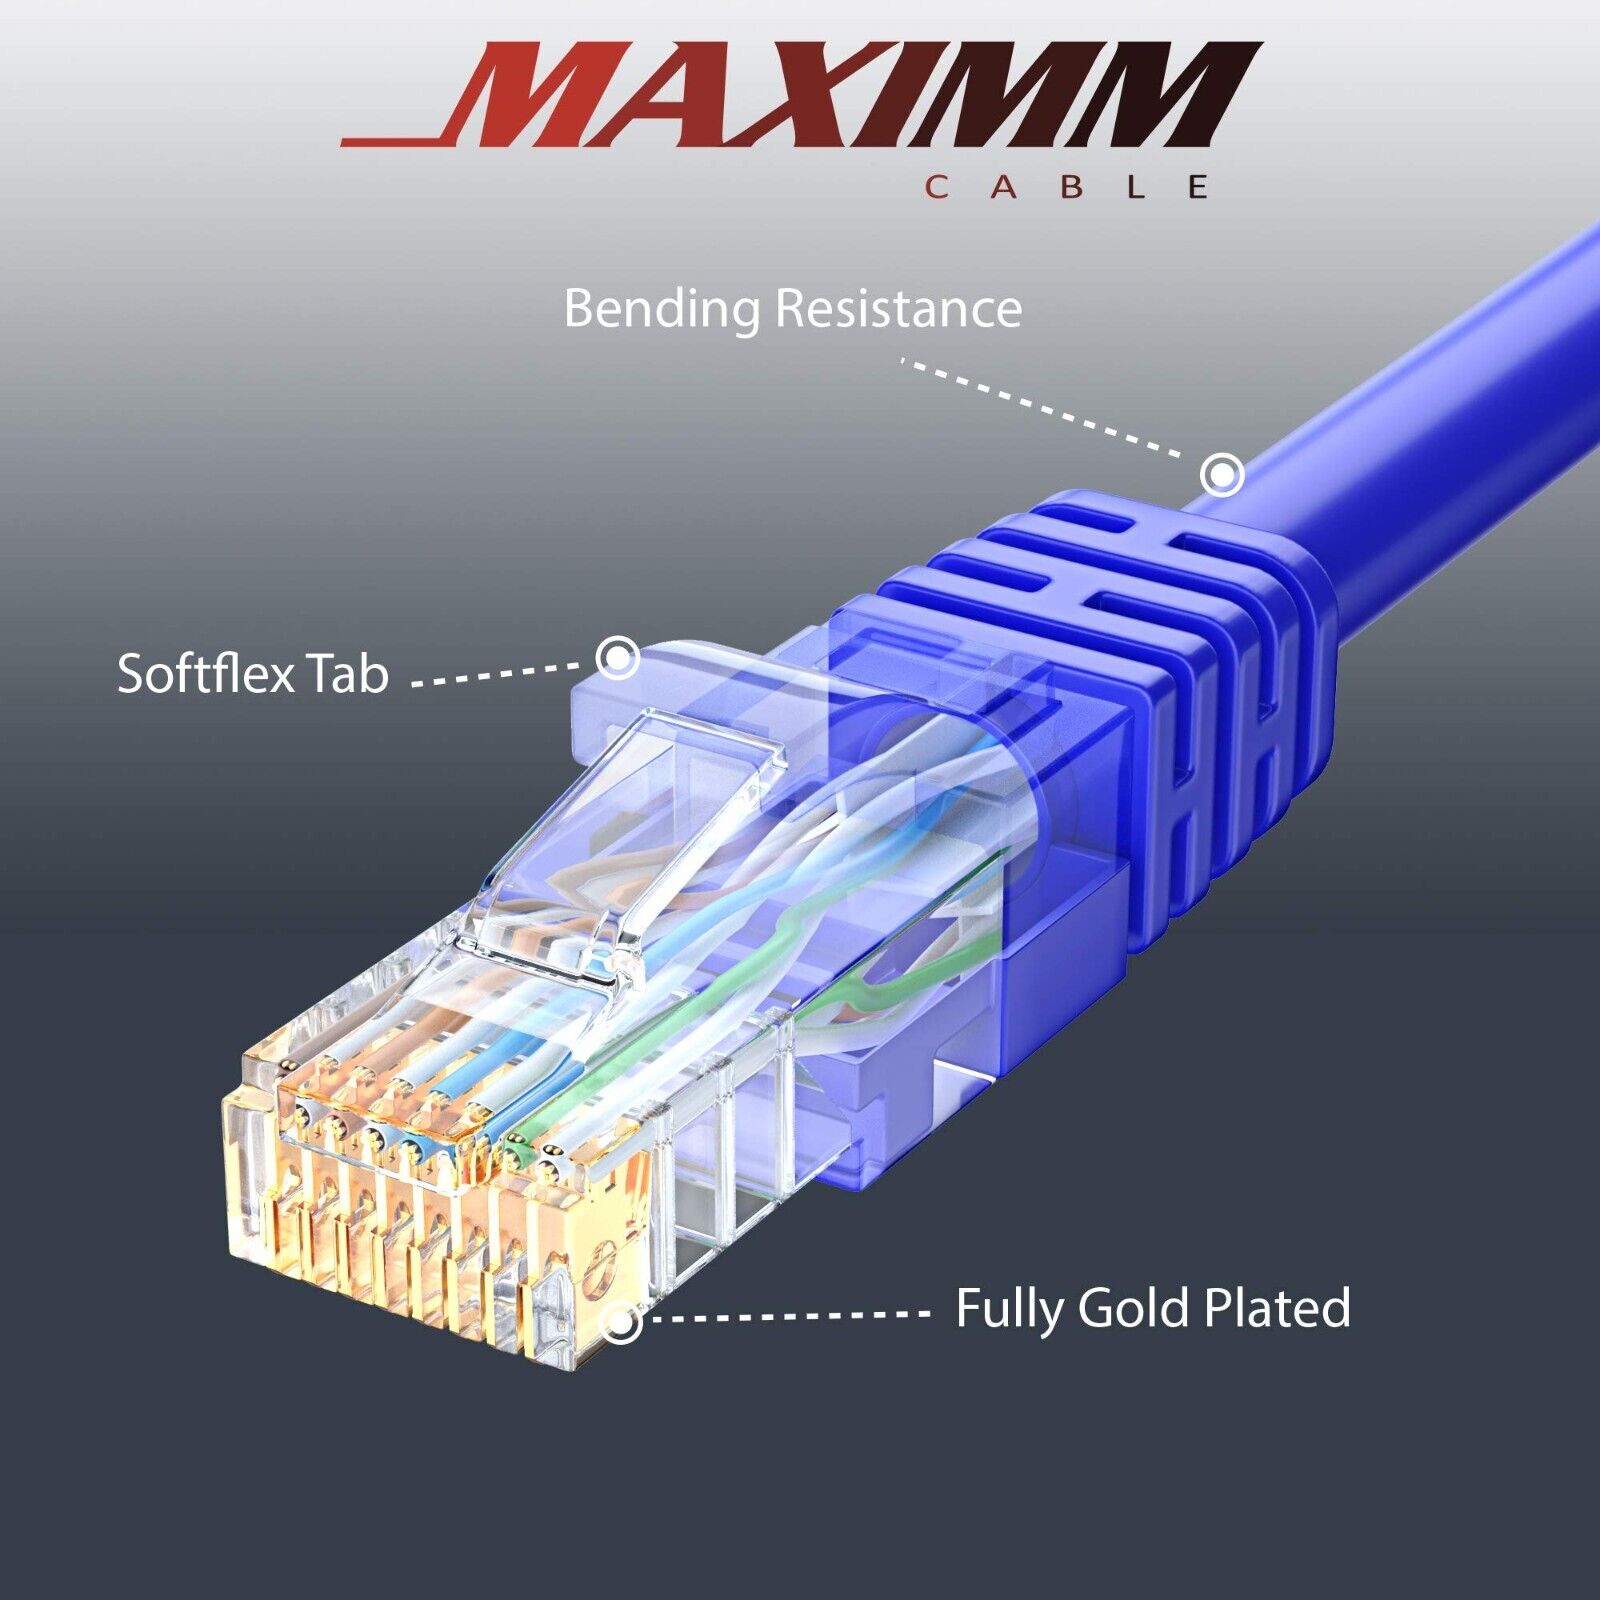 Maximm Cat 6 Ethernet Cable 12 Ft 100% Pure Copper Cat6 Cable 5 Pack LAN Blue